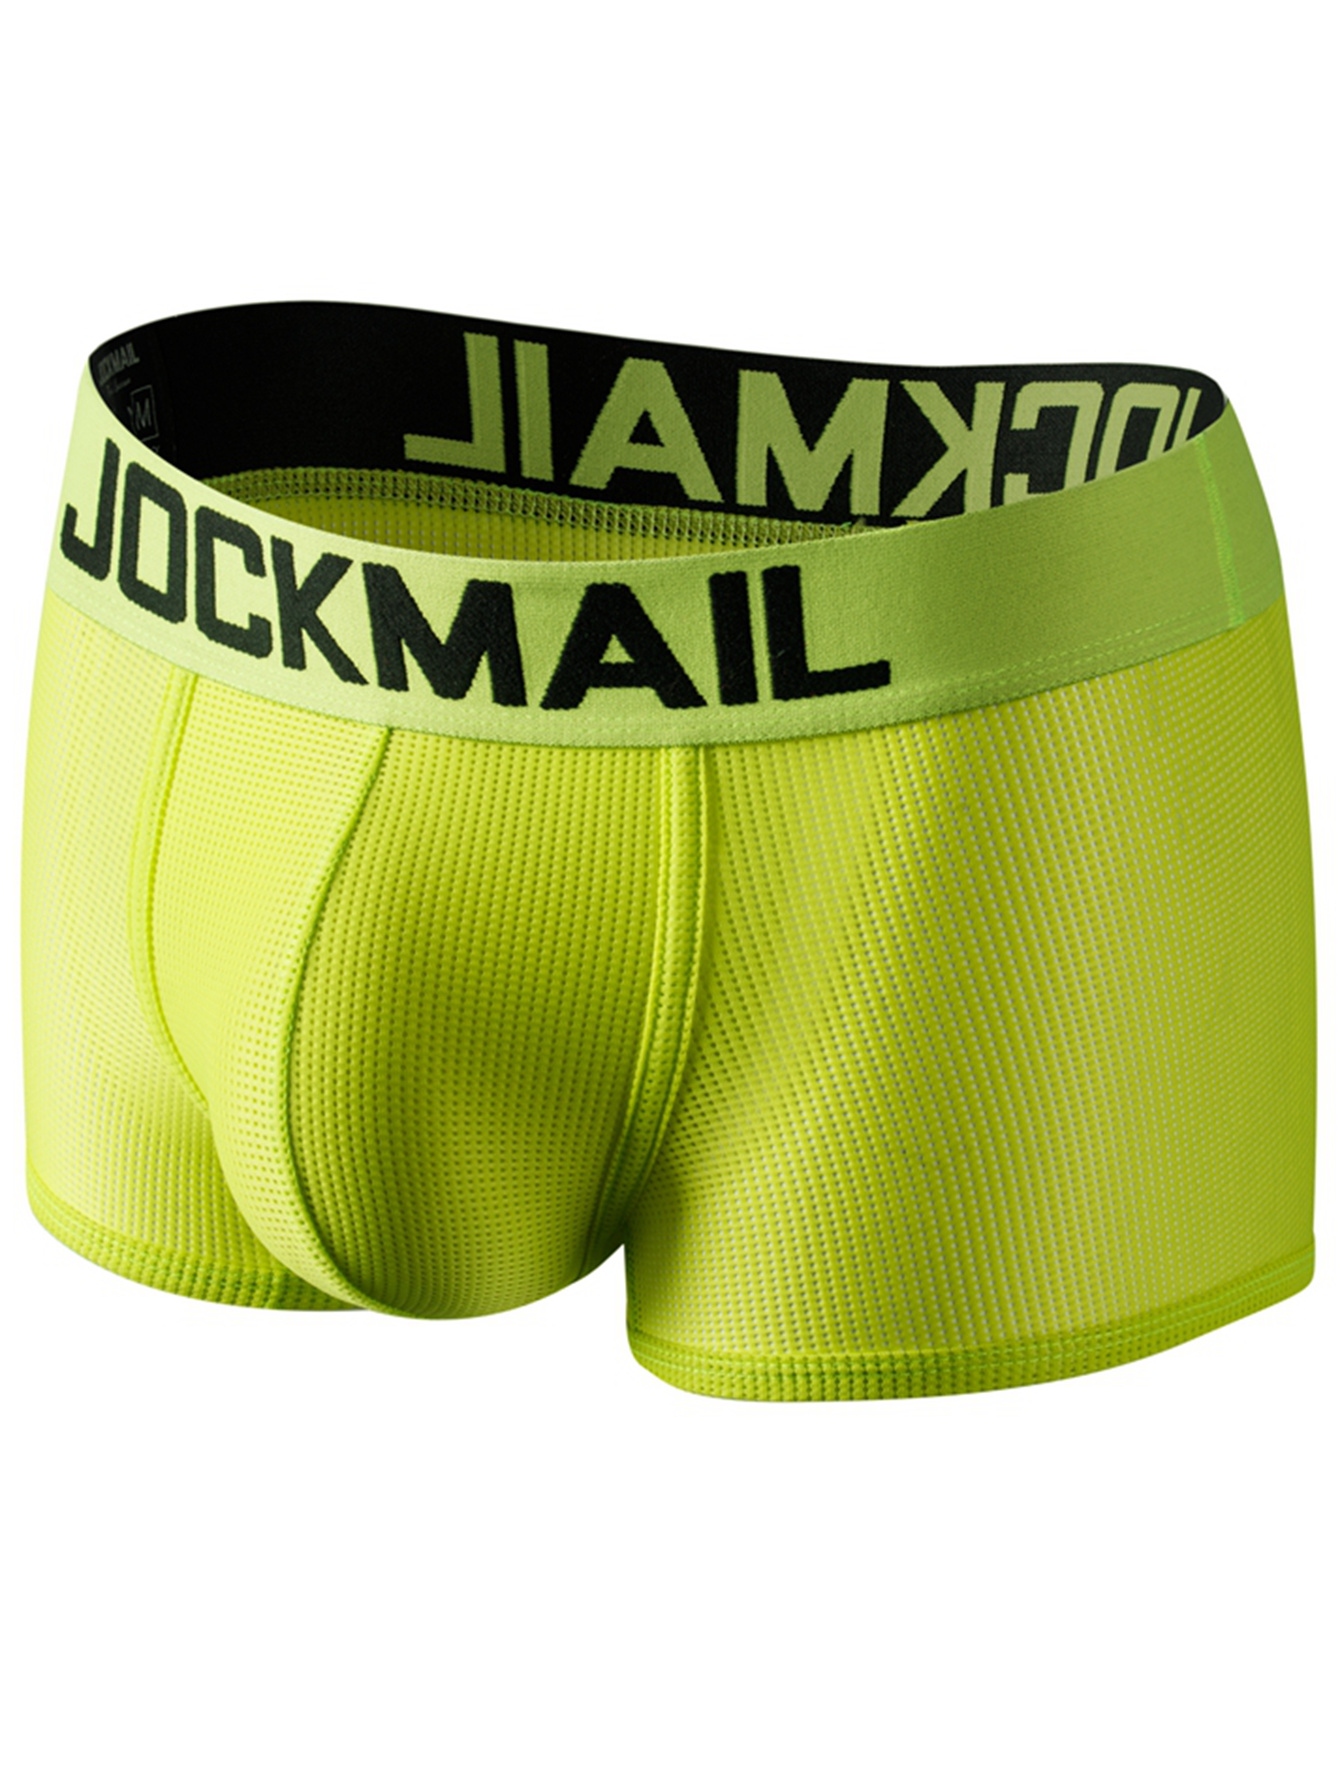 Underpants - JAM Clothing